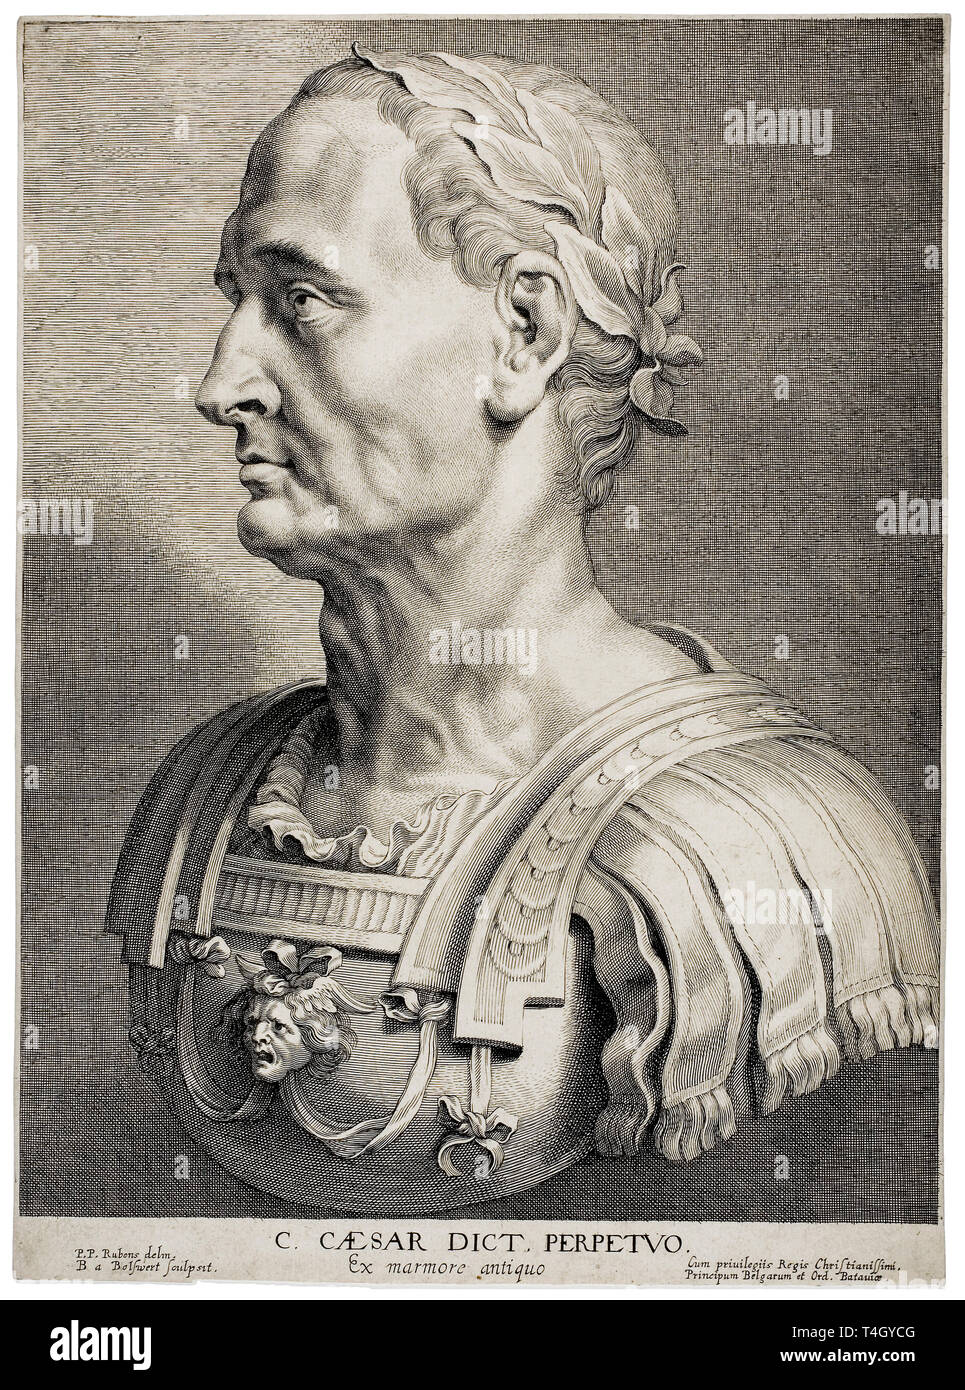 Julius Caesar portrait, Perpetual Dictator, bust engraving by Boëtius Adamsz. Bolswert after Peter Paul Rubens, c. 1633 Stock Photo